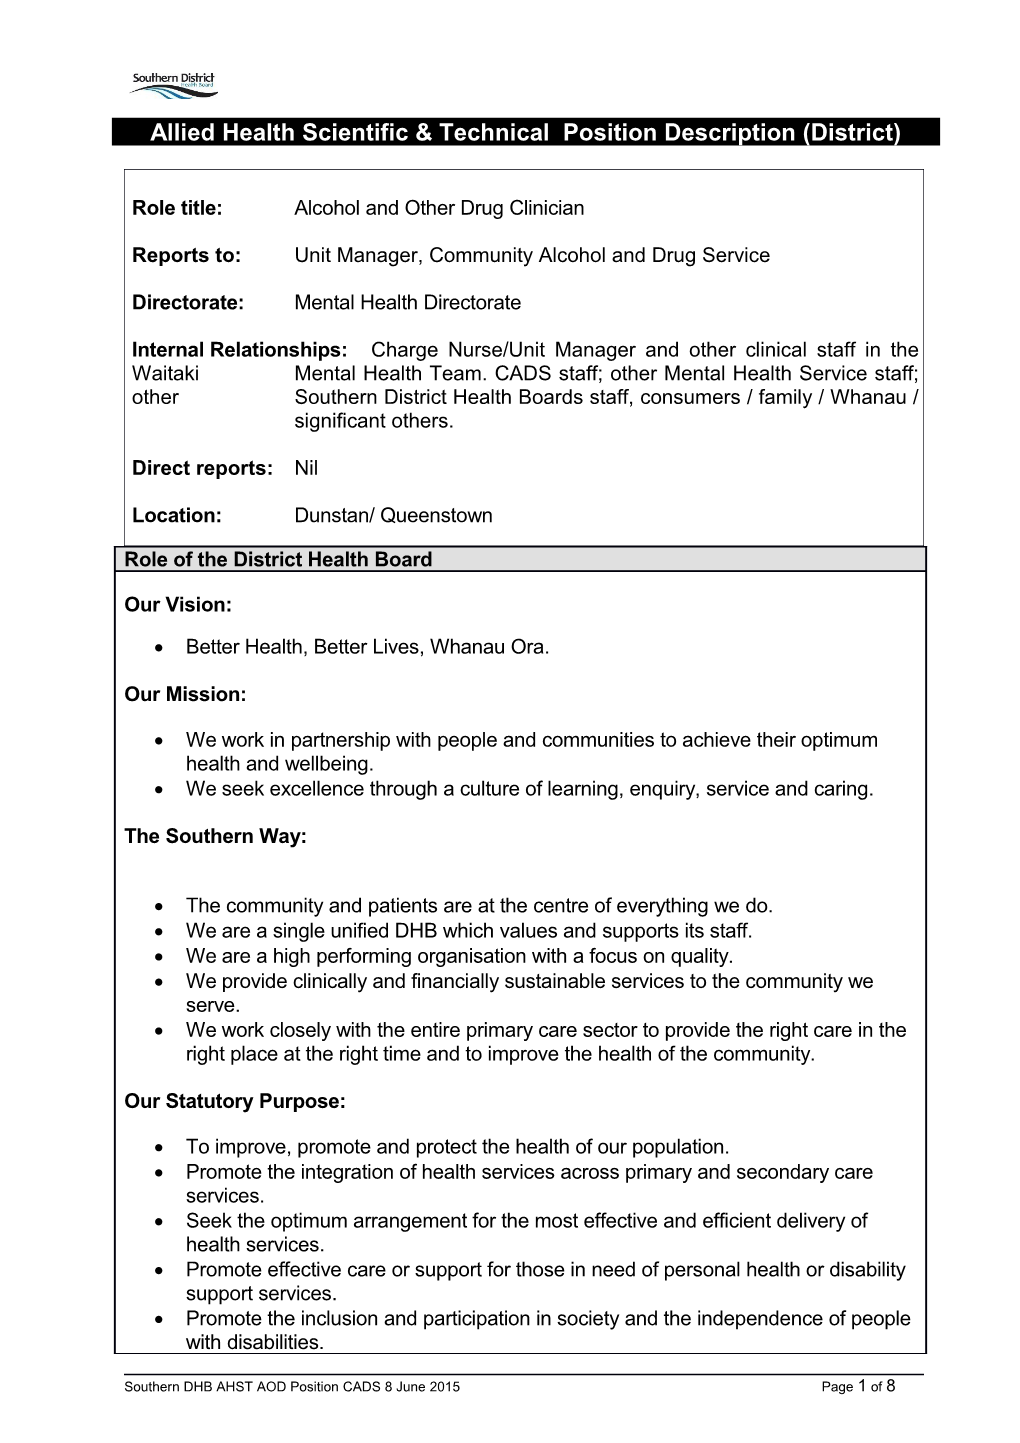 Allied Health Scientific & Technical Position Description(District)